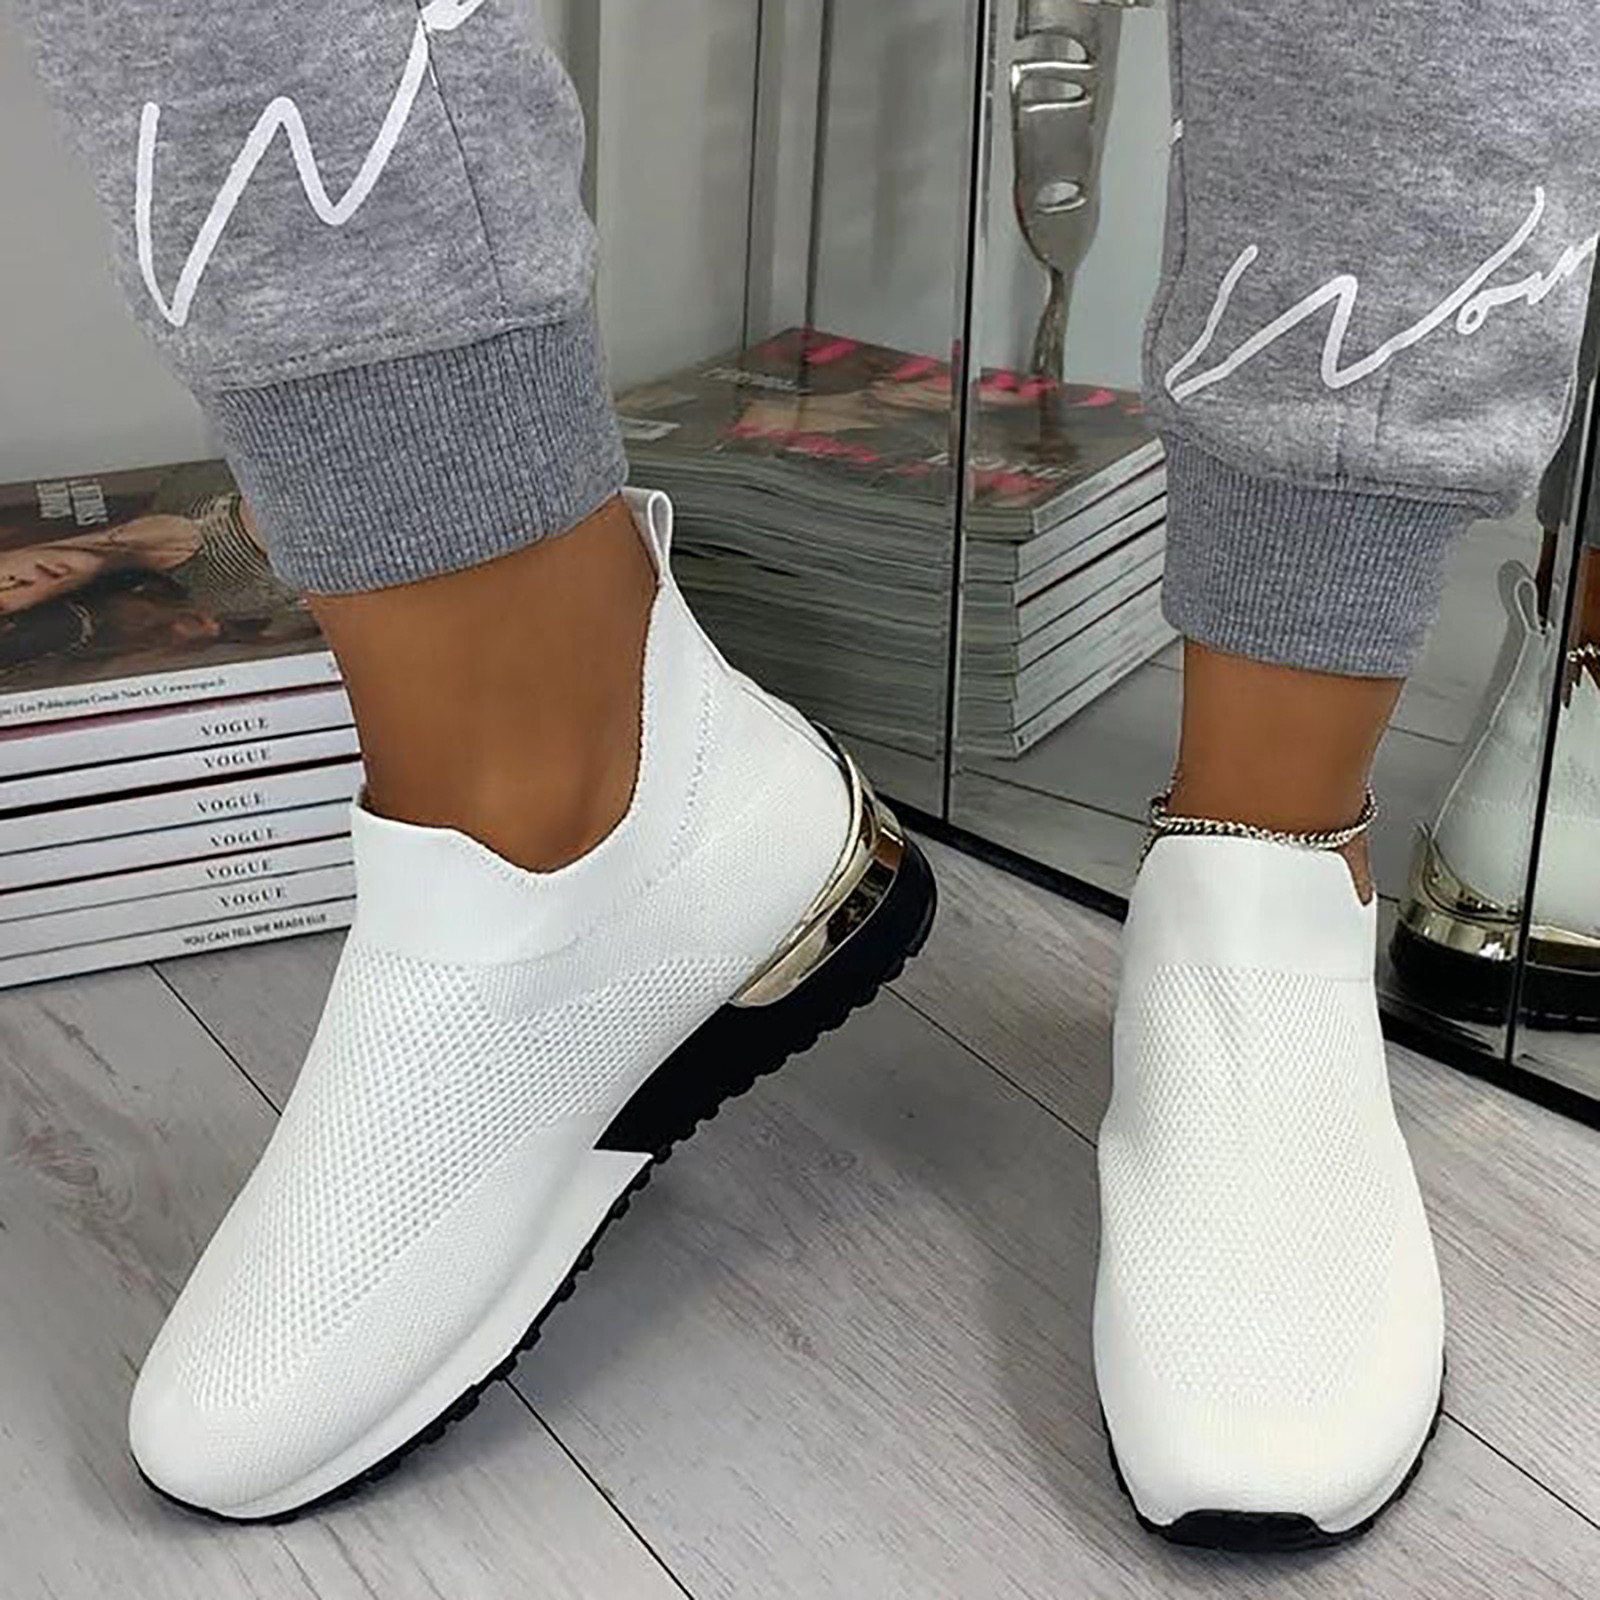 Ecqkame Womens Walking Tennis Shoes Clearance Sandals Stretch Cloth ...